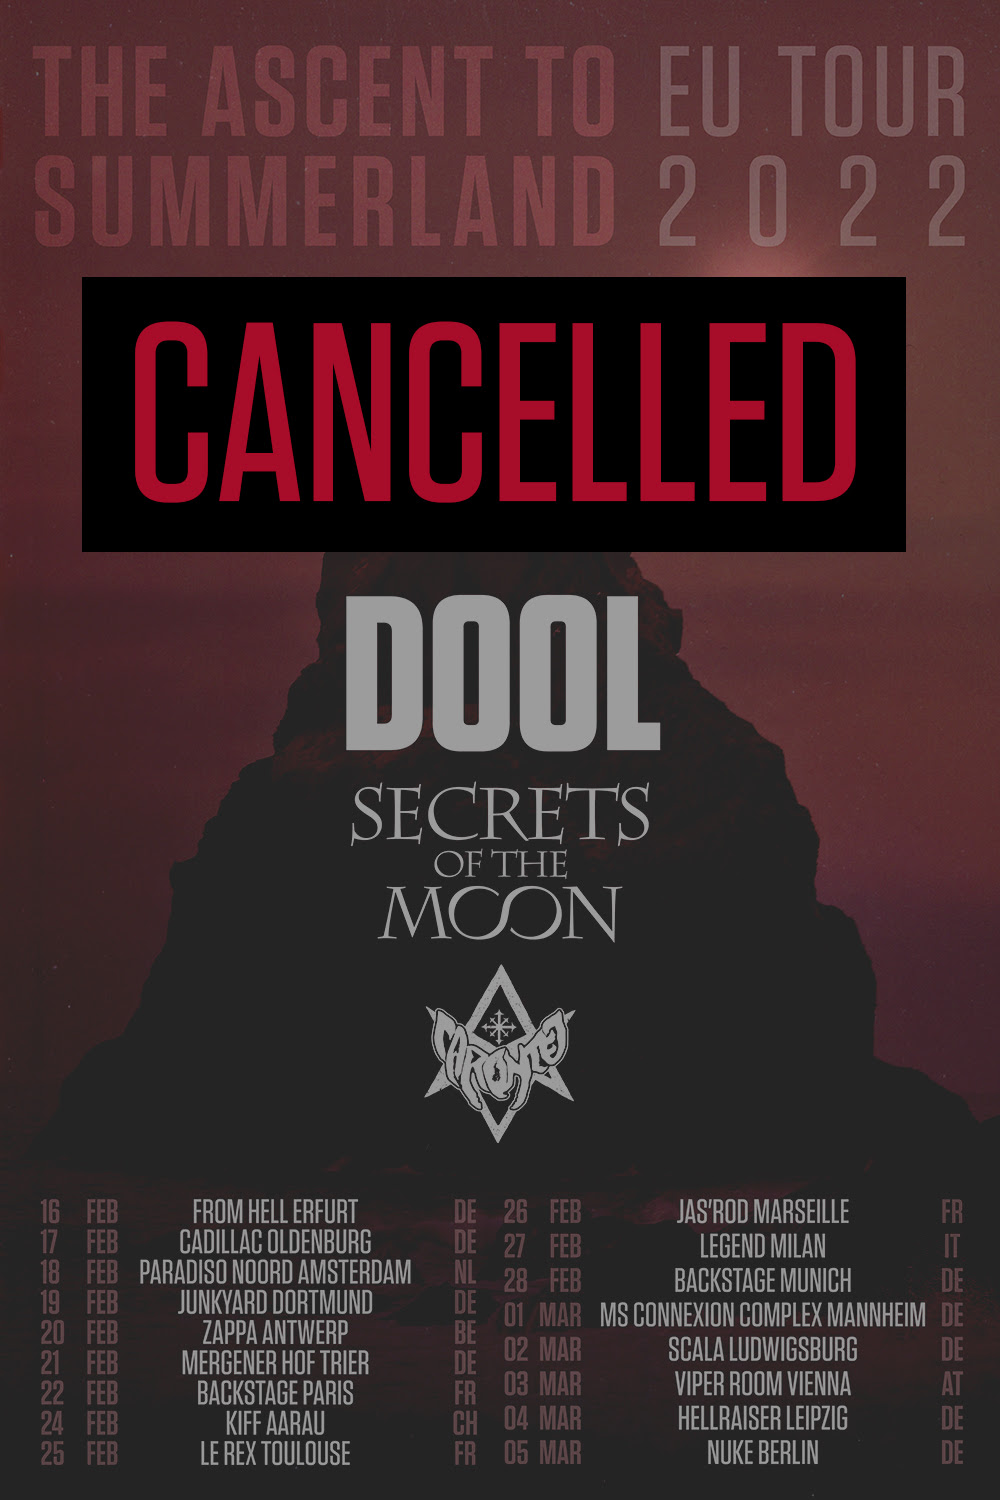 Dool tour cancelled